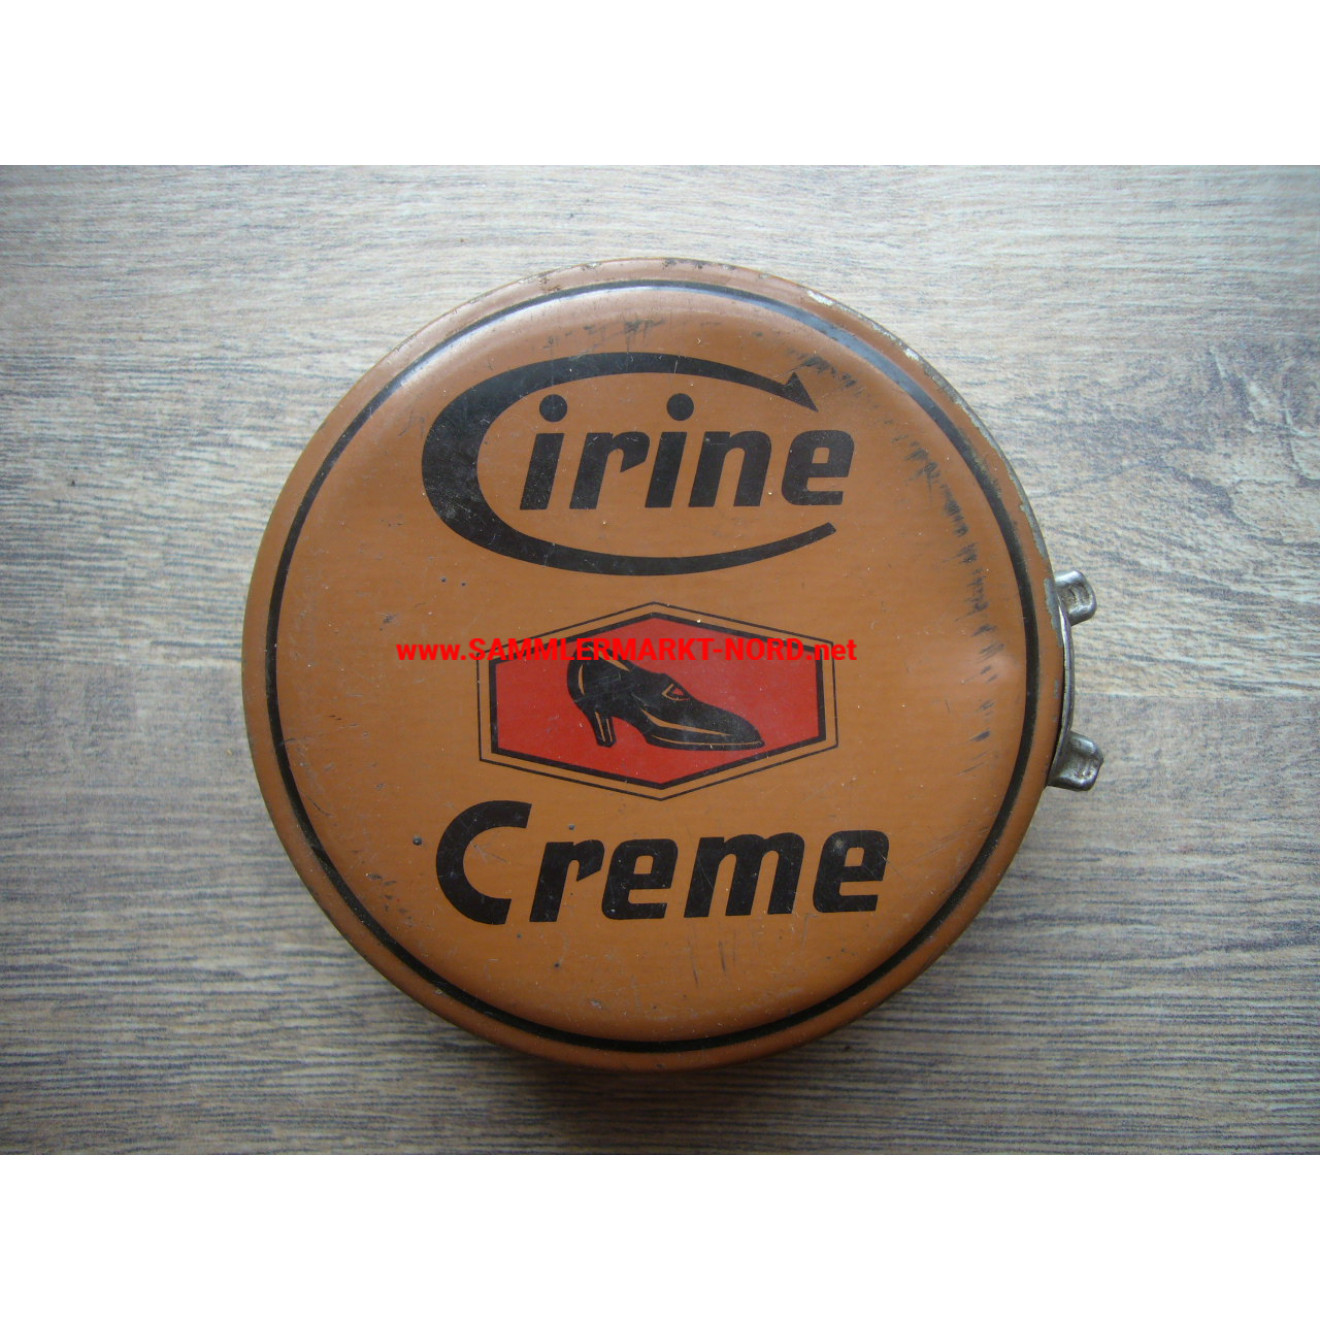 Wehrmacht - sutlers - Cirine cream - shoe polish tin